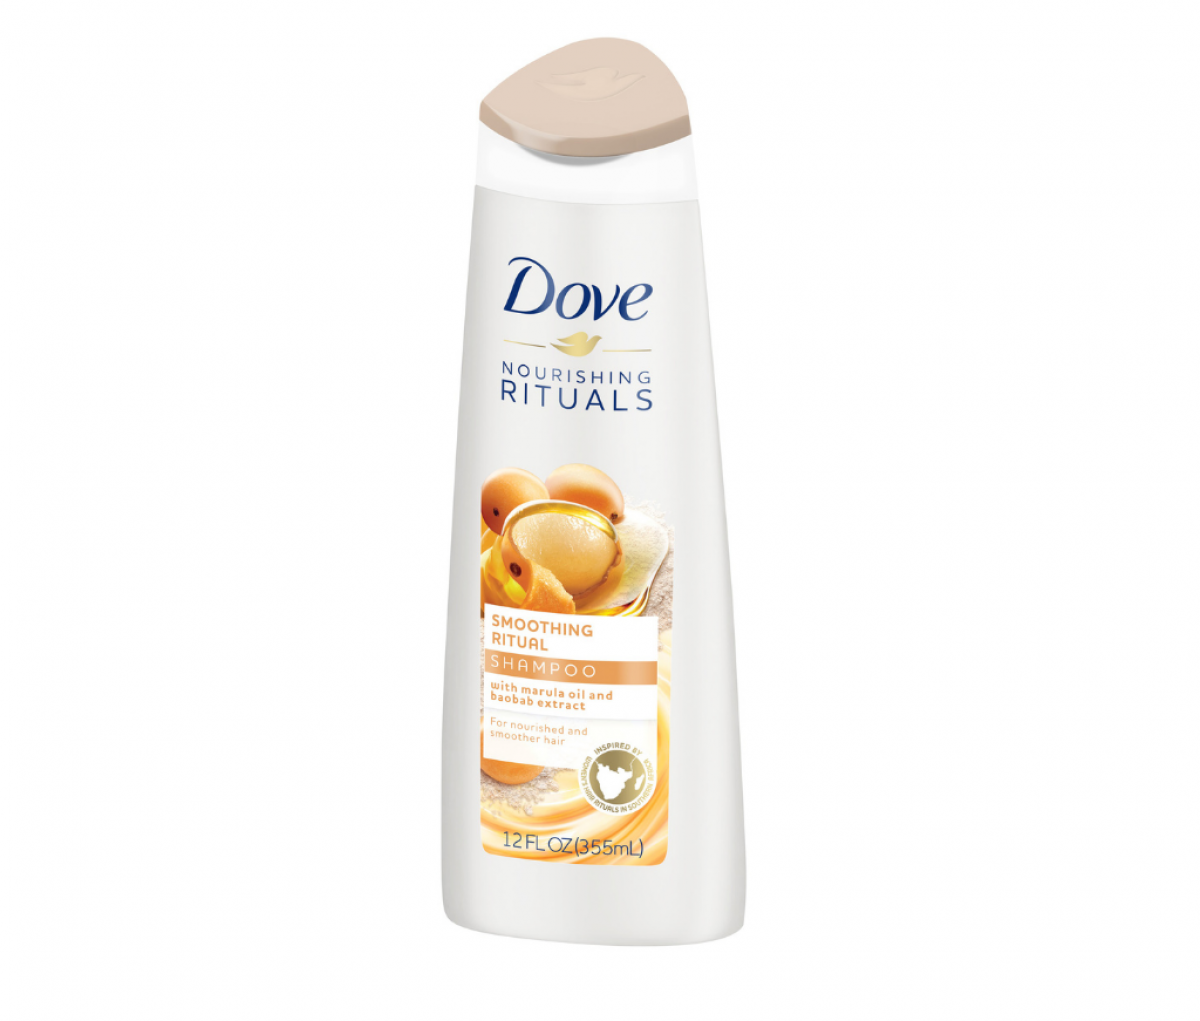 Dove 12oz smoothing ritual oil care shampoo